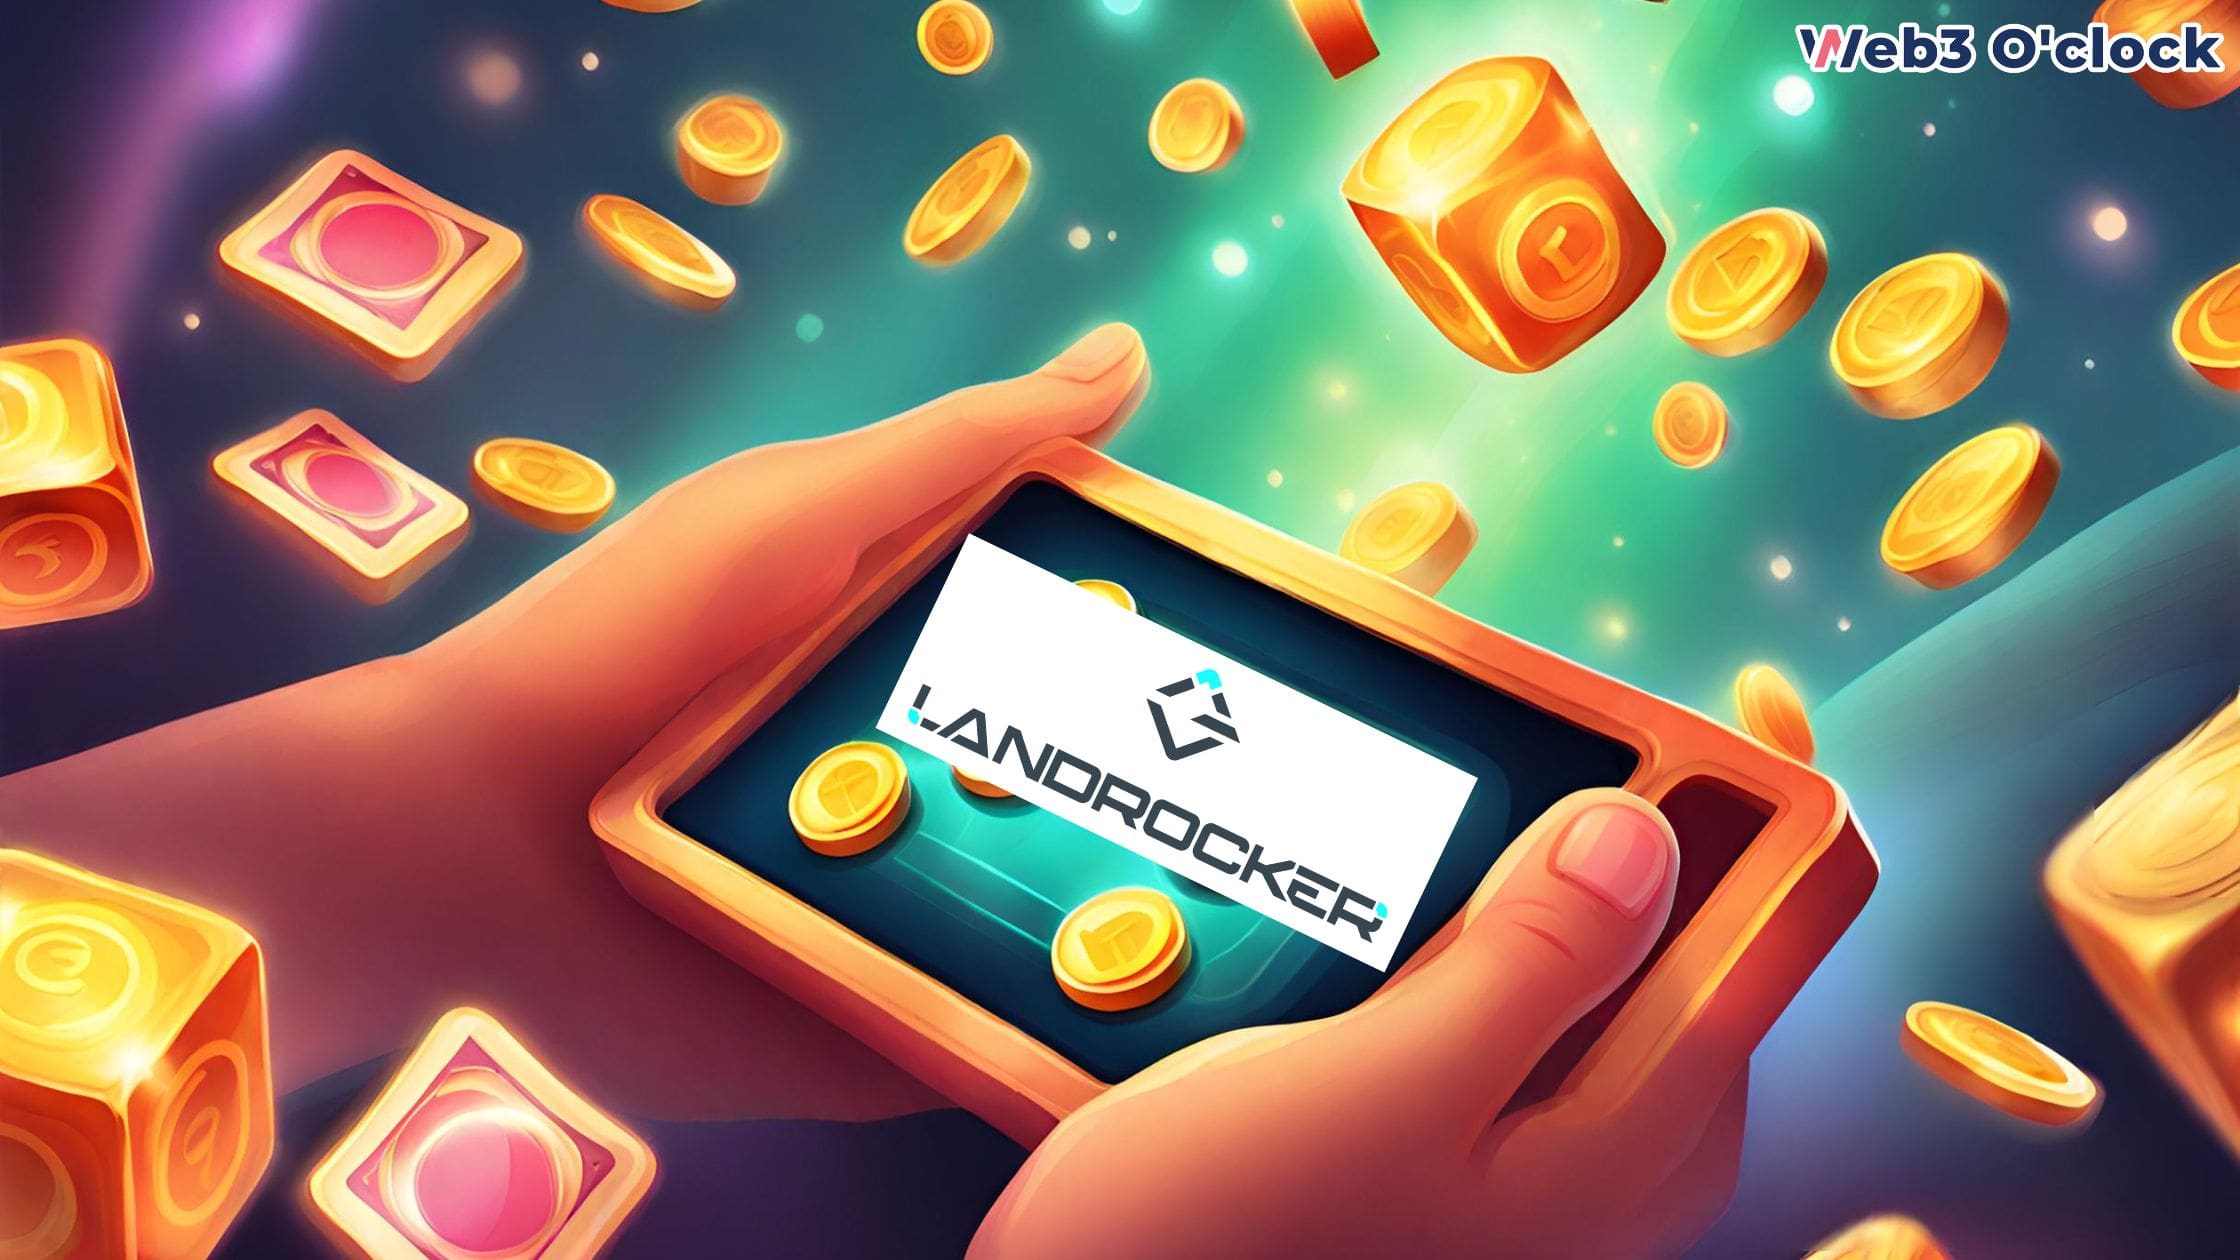 Landrocker's Funding Ignites P2E Gaming by Web3 O'clock